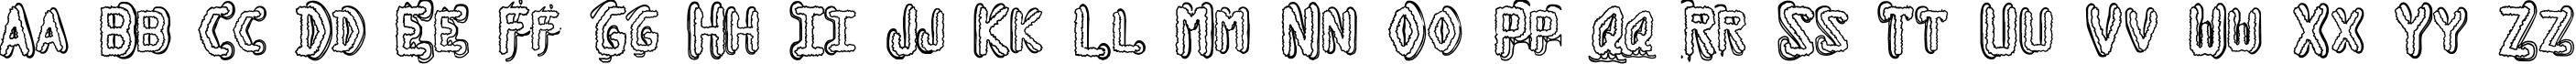 Пример написания английского алфавита шрифтом Dymo Grunge Bubble Extras